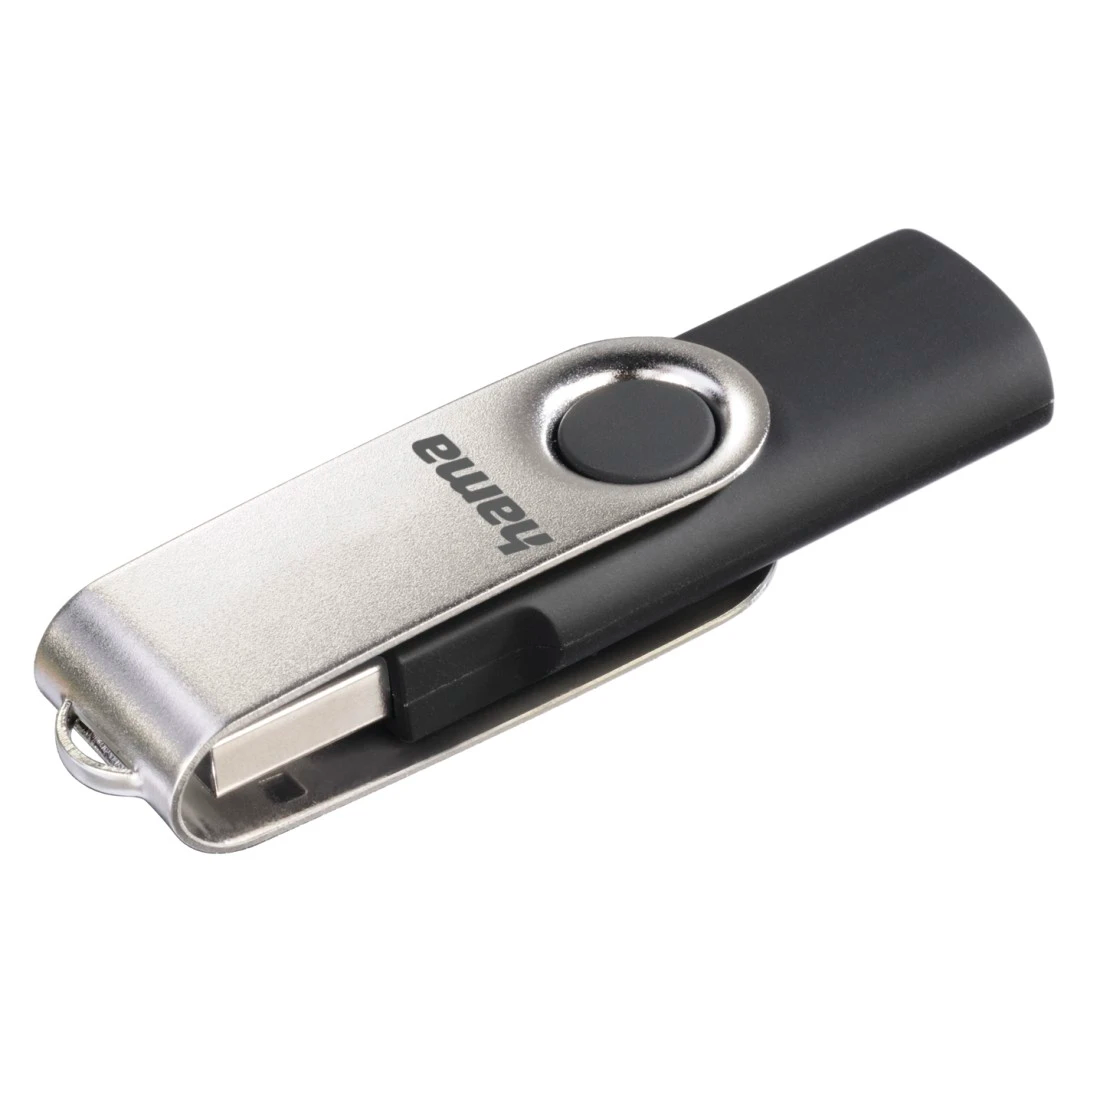 Hama Rotate USB 2.0 10MB/s 32GB USB Flash Drive - Black &amp; Silver | 161215 from Hama - DID Electrical